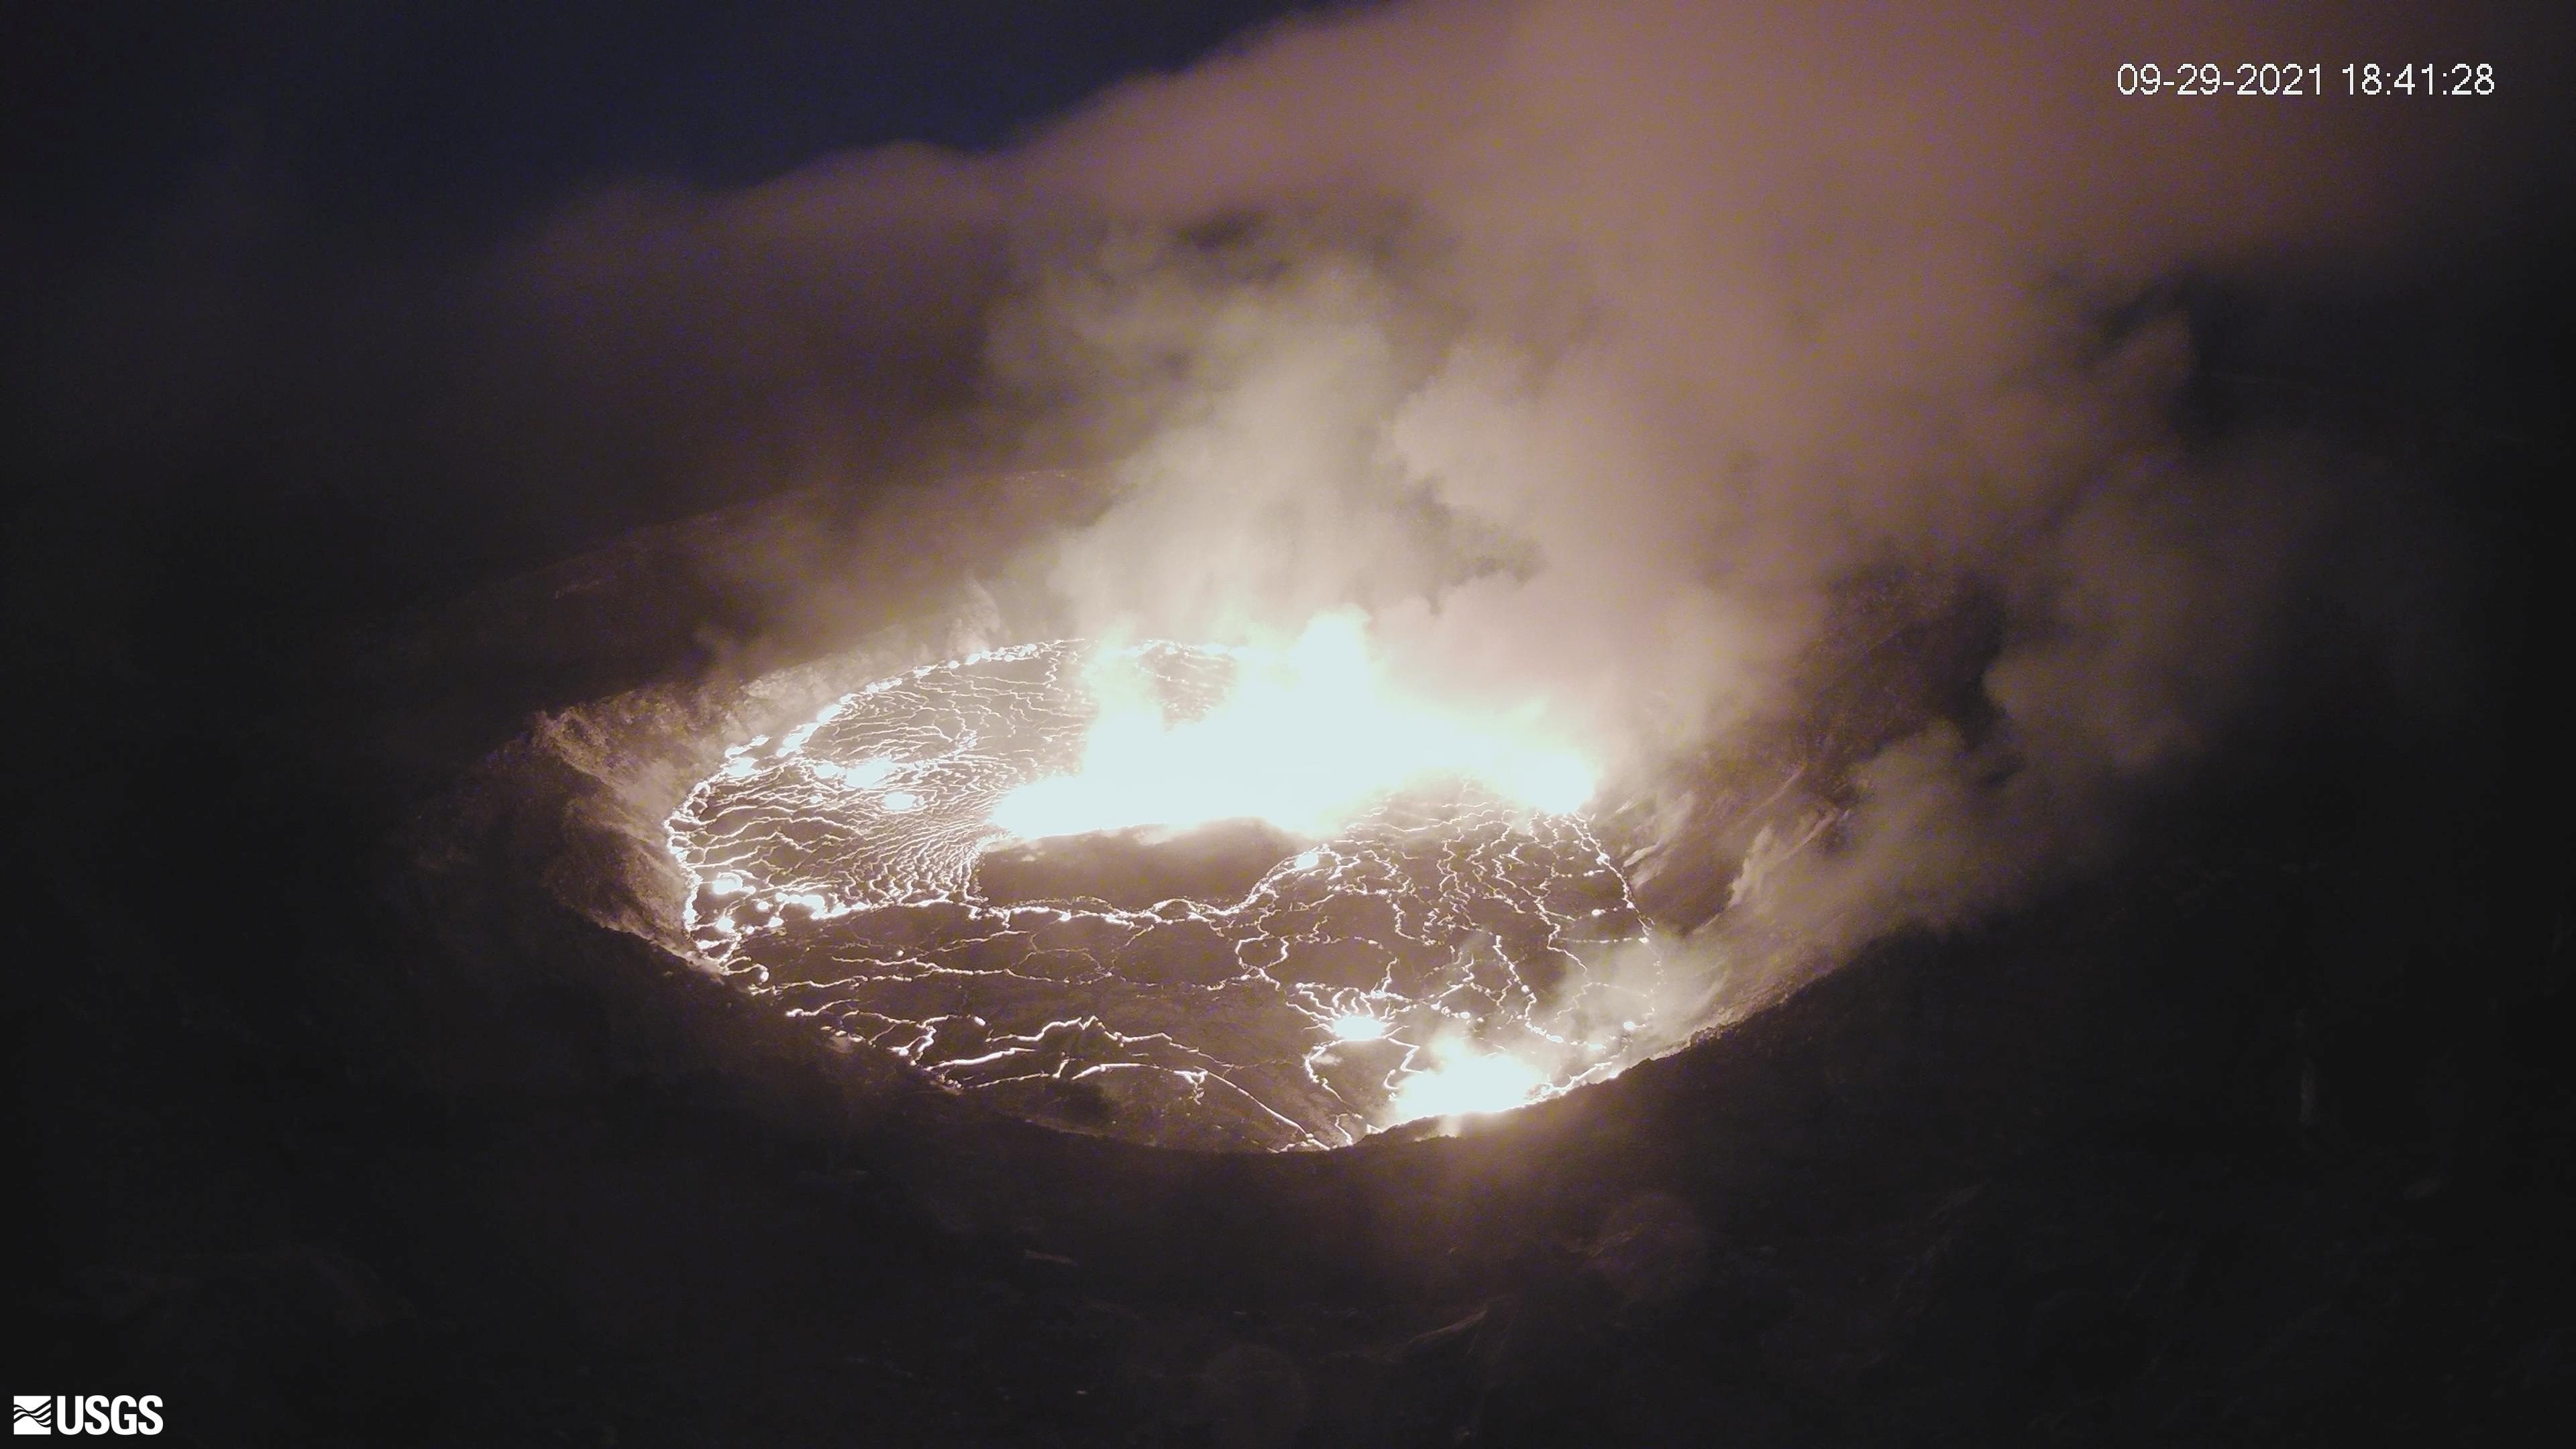 Hawaii’s Kilauea volcano erupting in ‘full swing’ – USGS